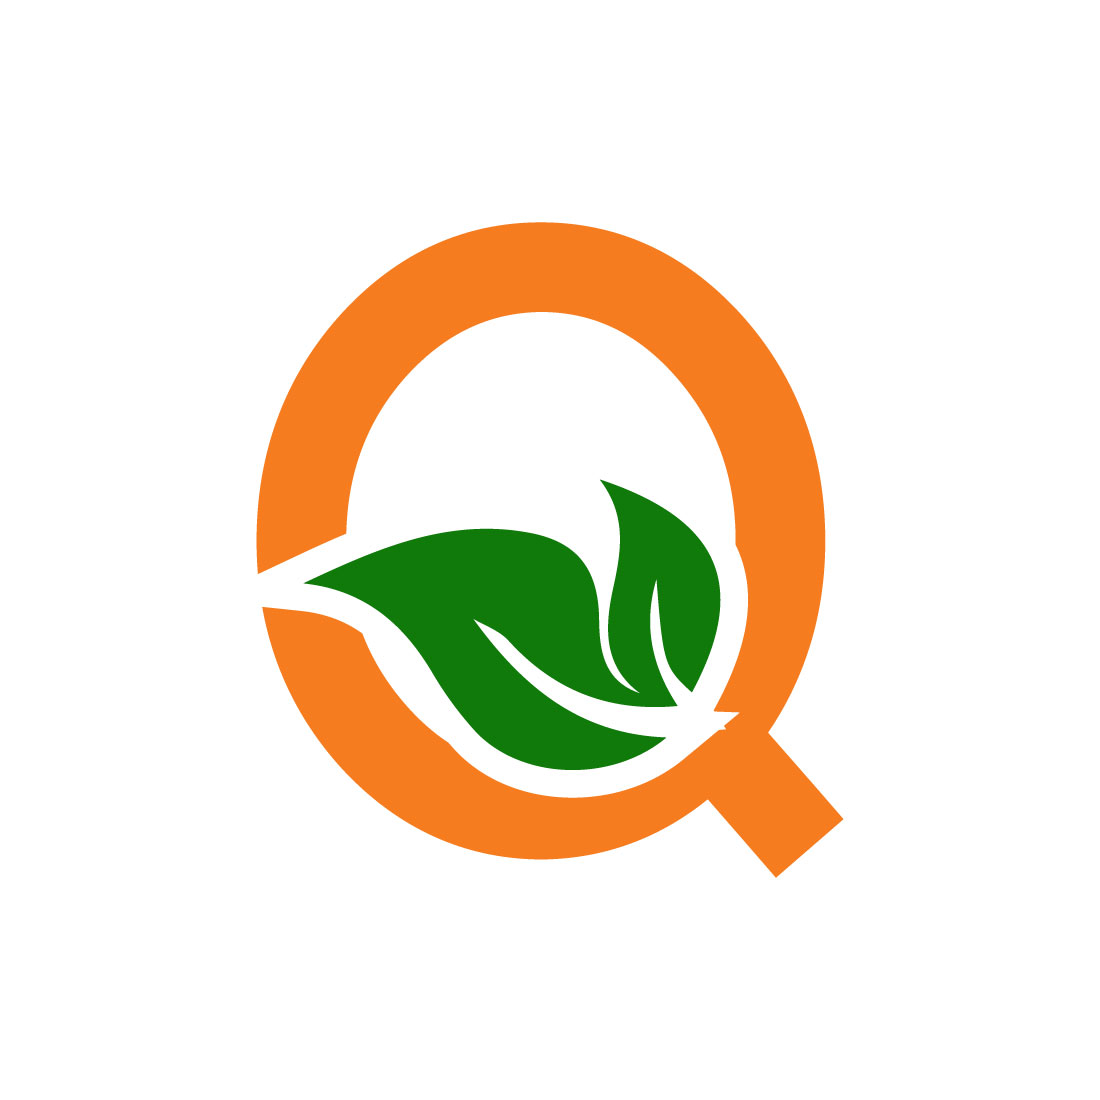 Free Q retro typography logo preview image.